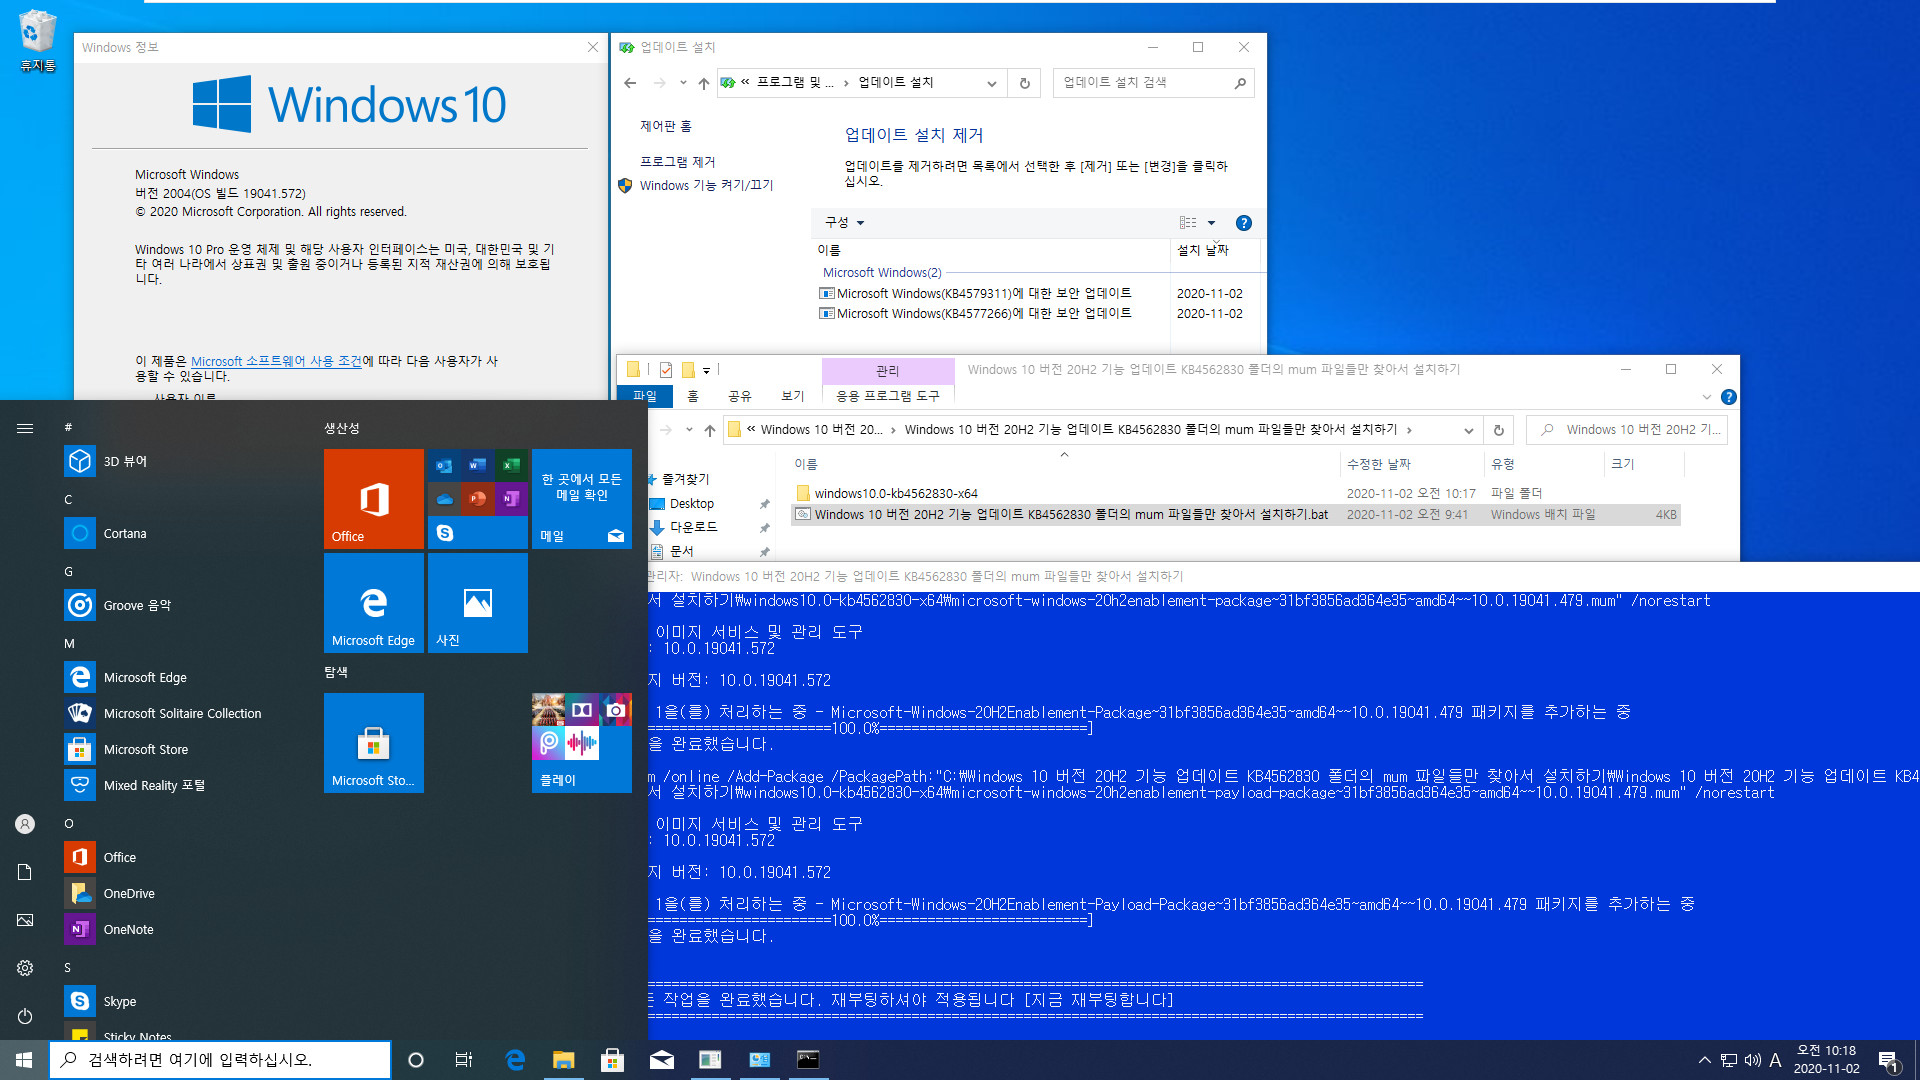 Windows 10 버전 20H2 기능 업데이트 KB4562830 폴더의 mum 파일들만 찾아서 설치하기.bat - 크로미엄 엣지 설치하지 않고 버전 20H2만 설치하기 테스트 - 뻘짓했네요 2020-11-02_101845.jpg